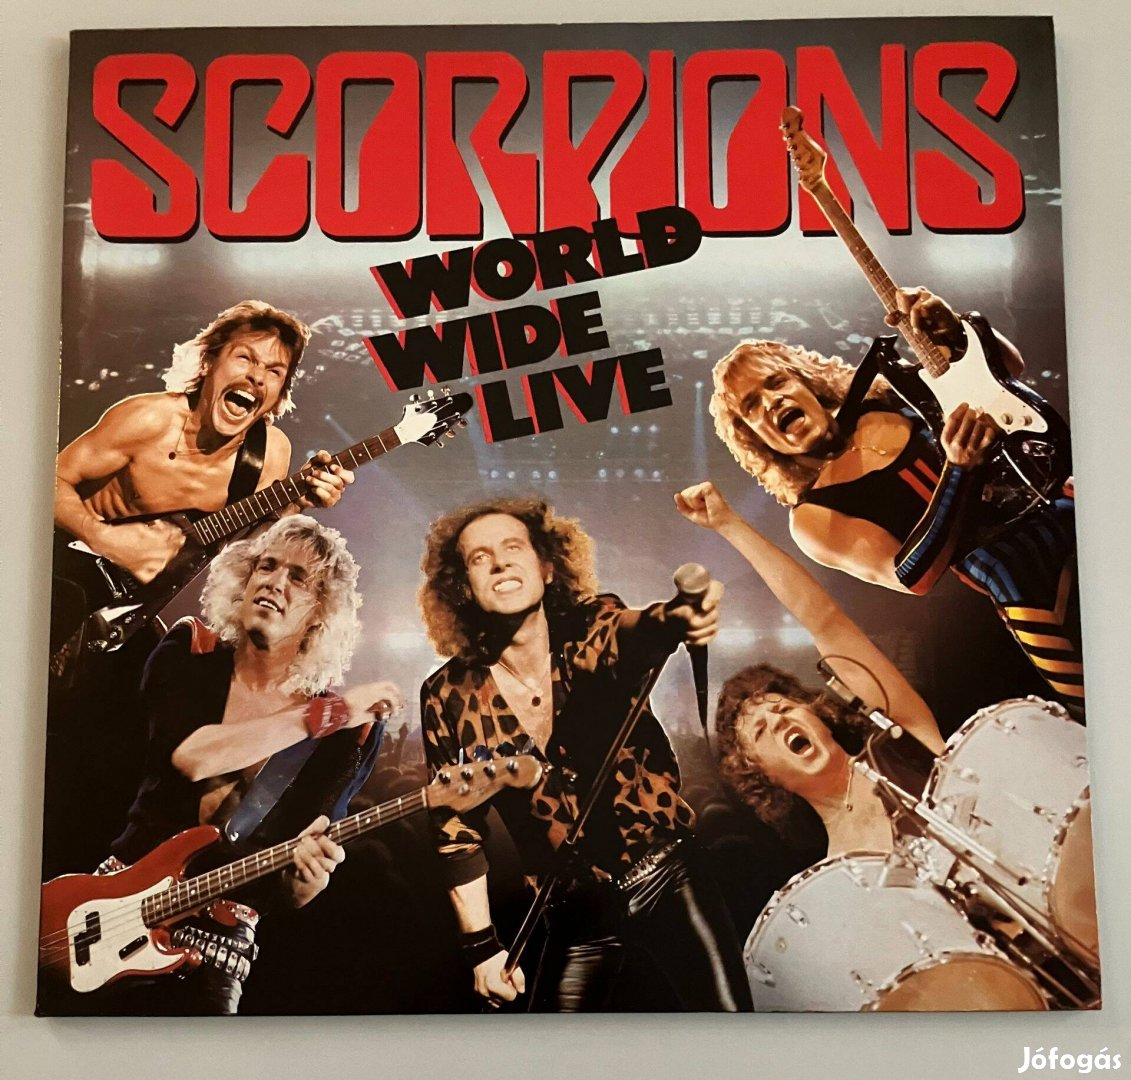 Scorpions - World Wide Live (német, 1985, poszter)